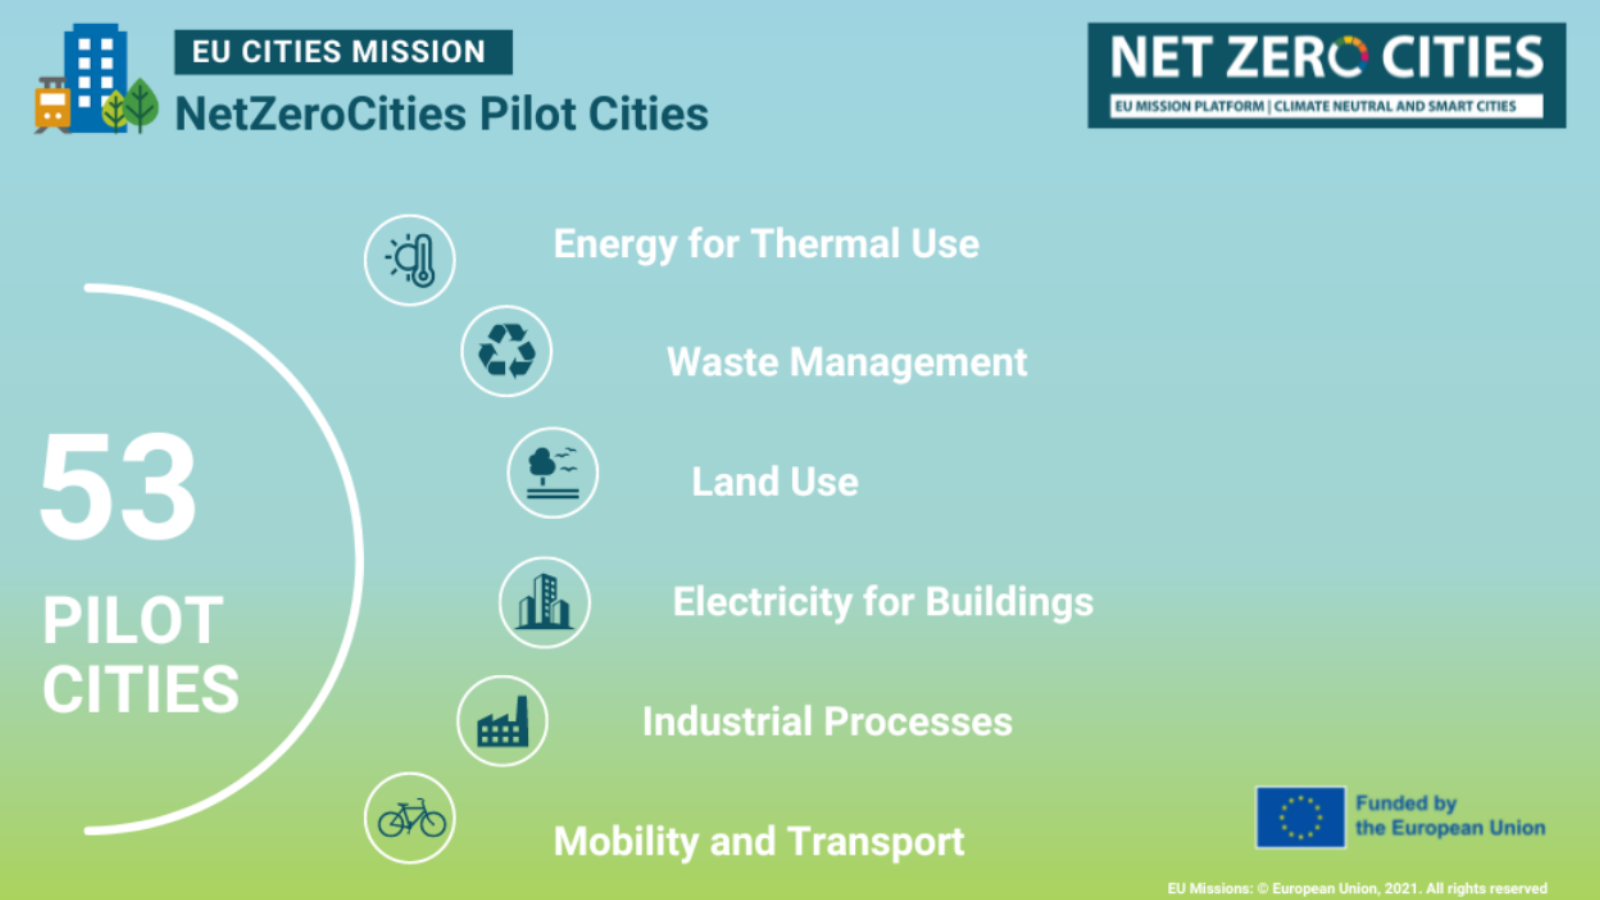 53 Cities selected to join the NetZeroCities Pilot Cities Programme